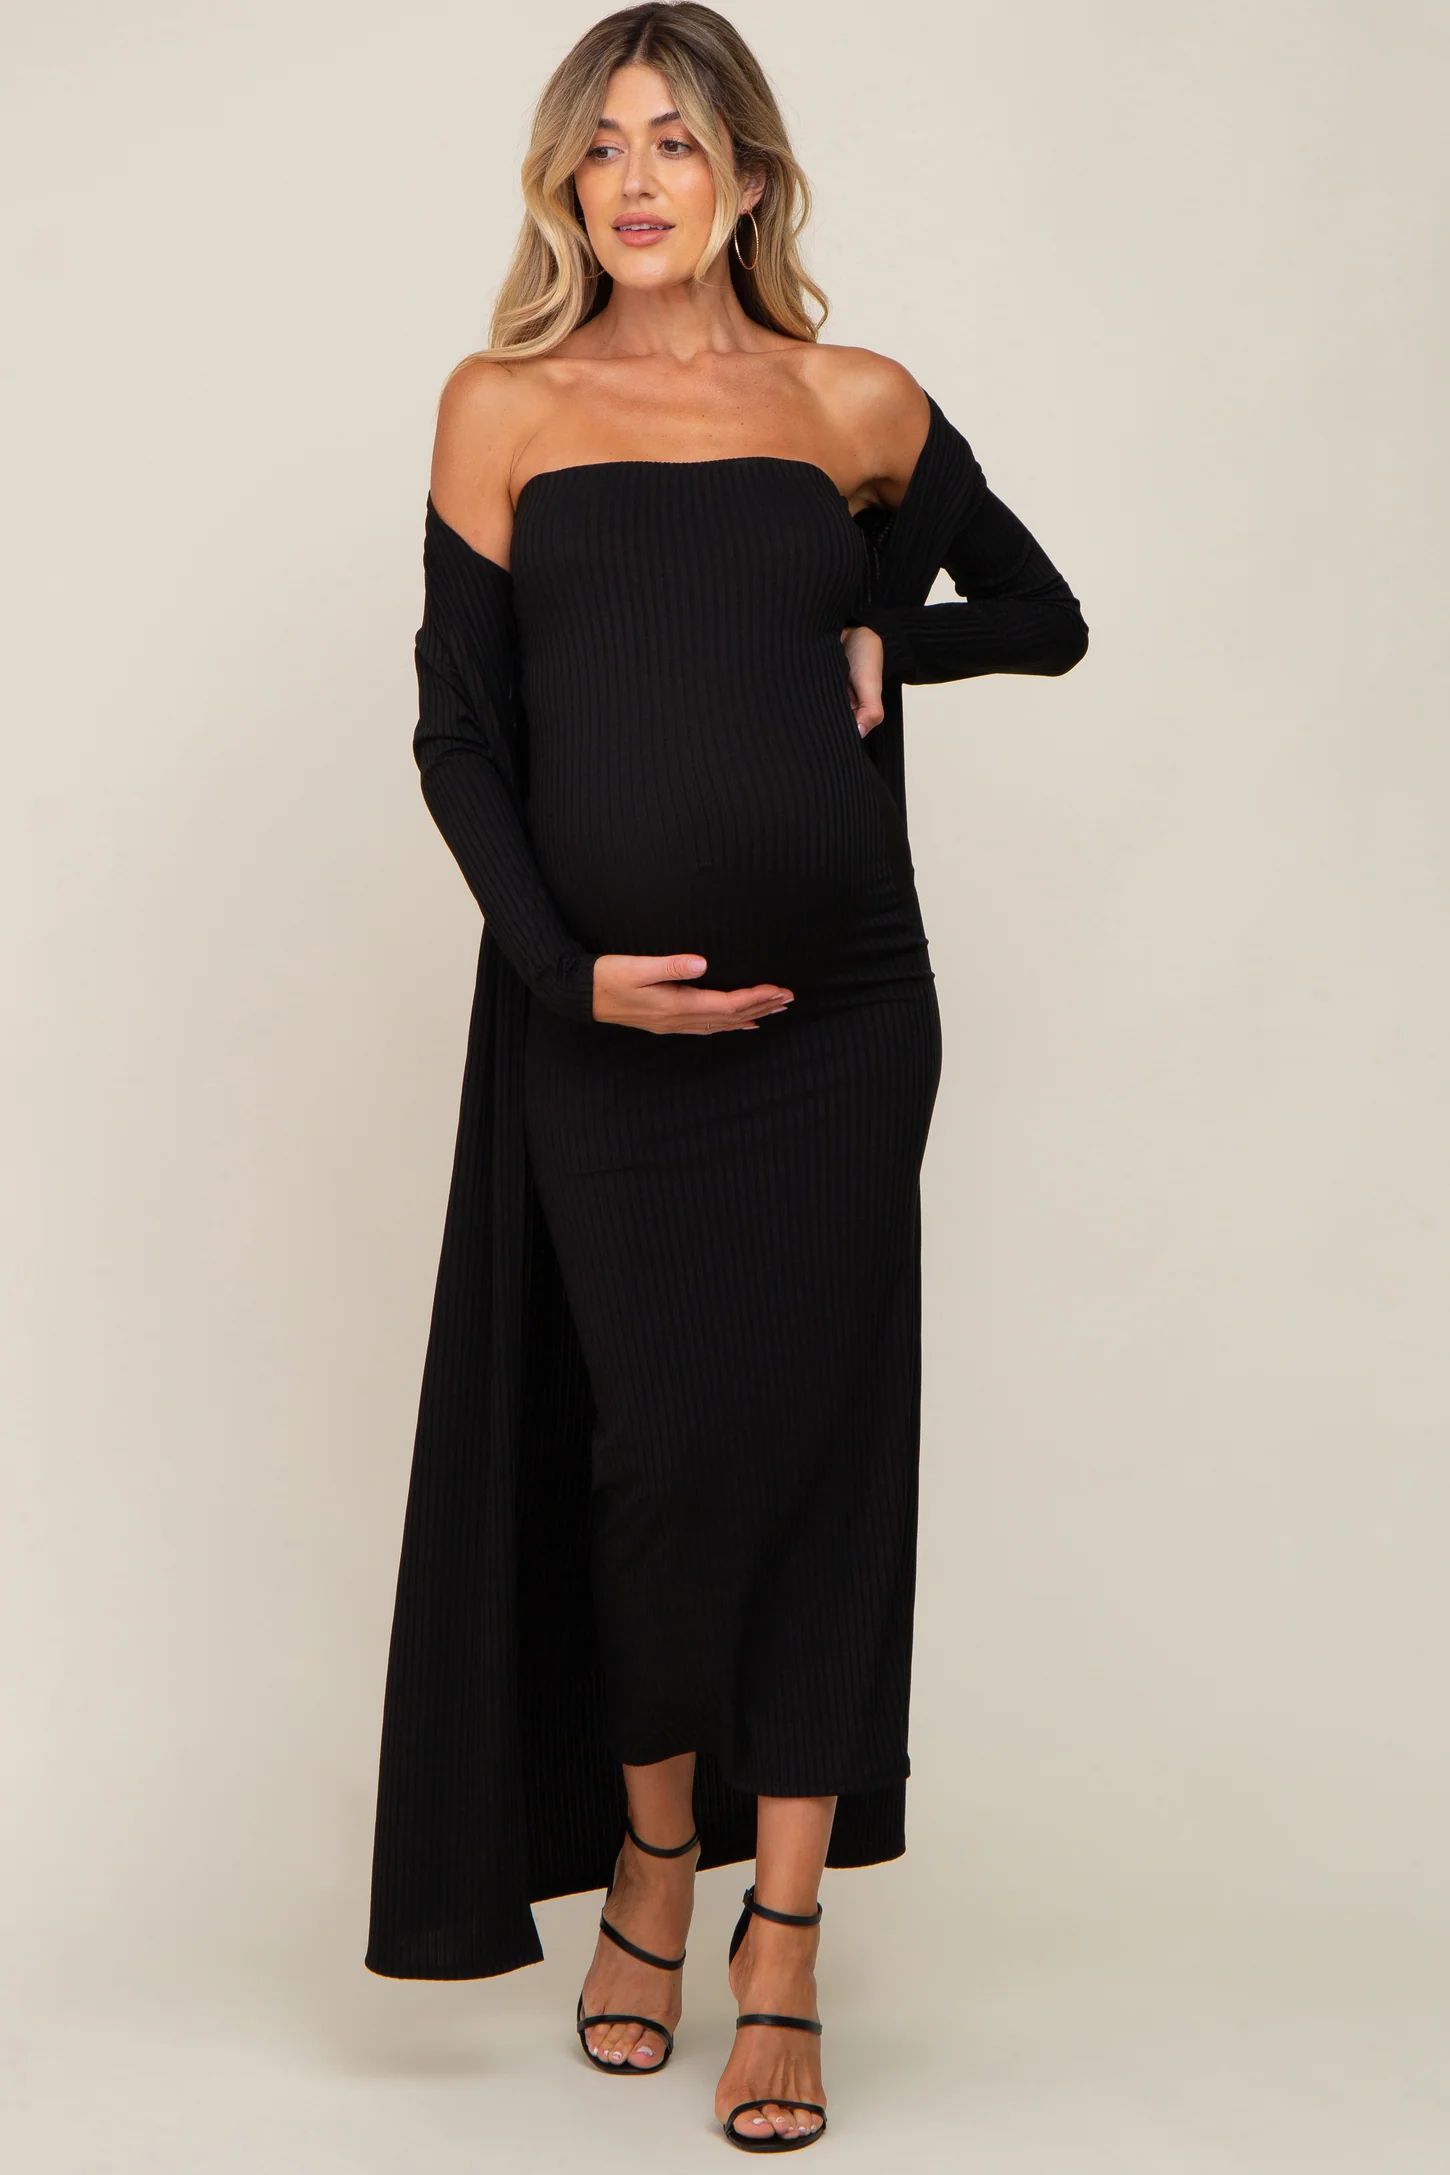 Black Ribbed Sleeveless Dress Cardigan Maternity Set | PinkBlush Maternity